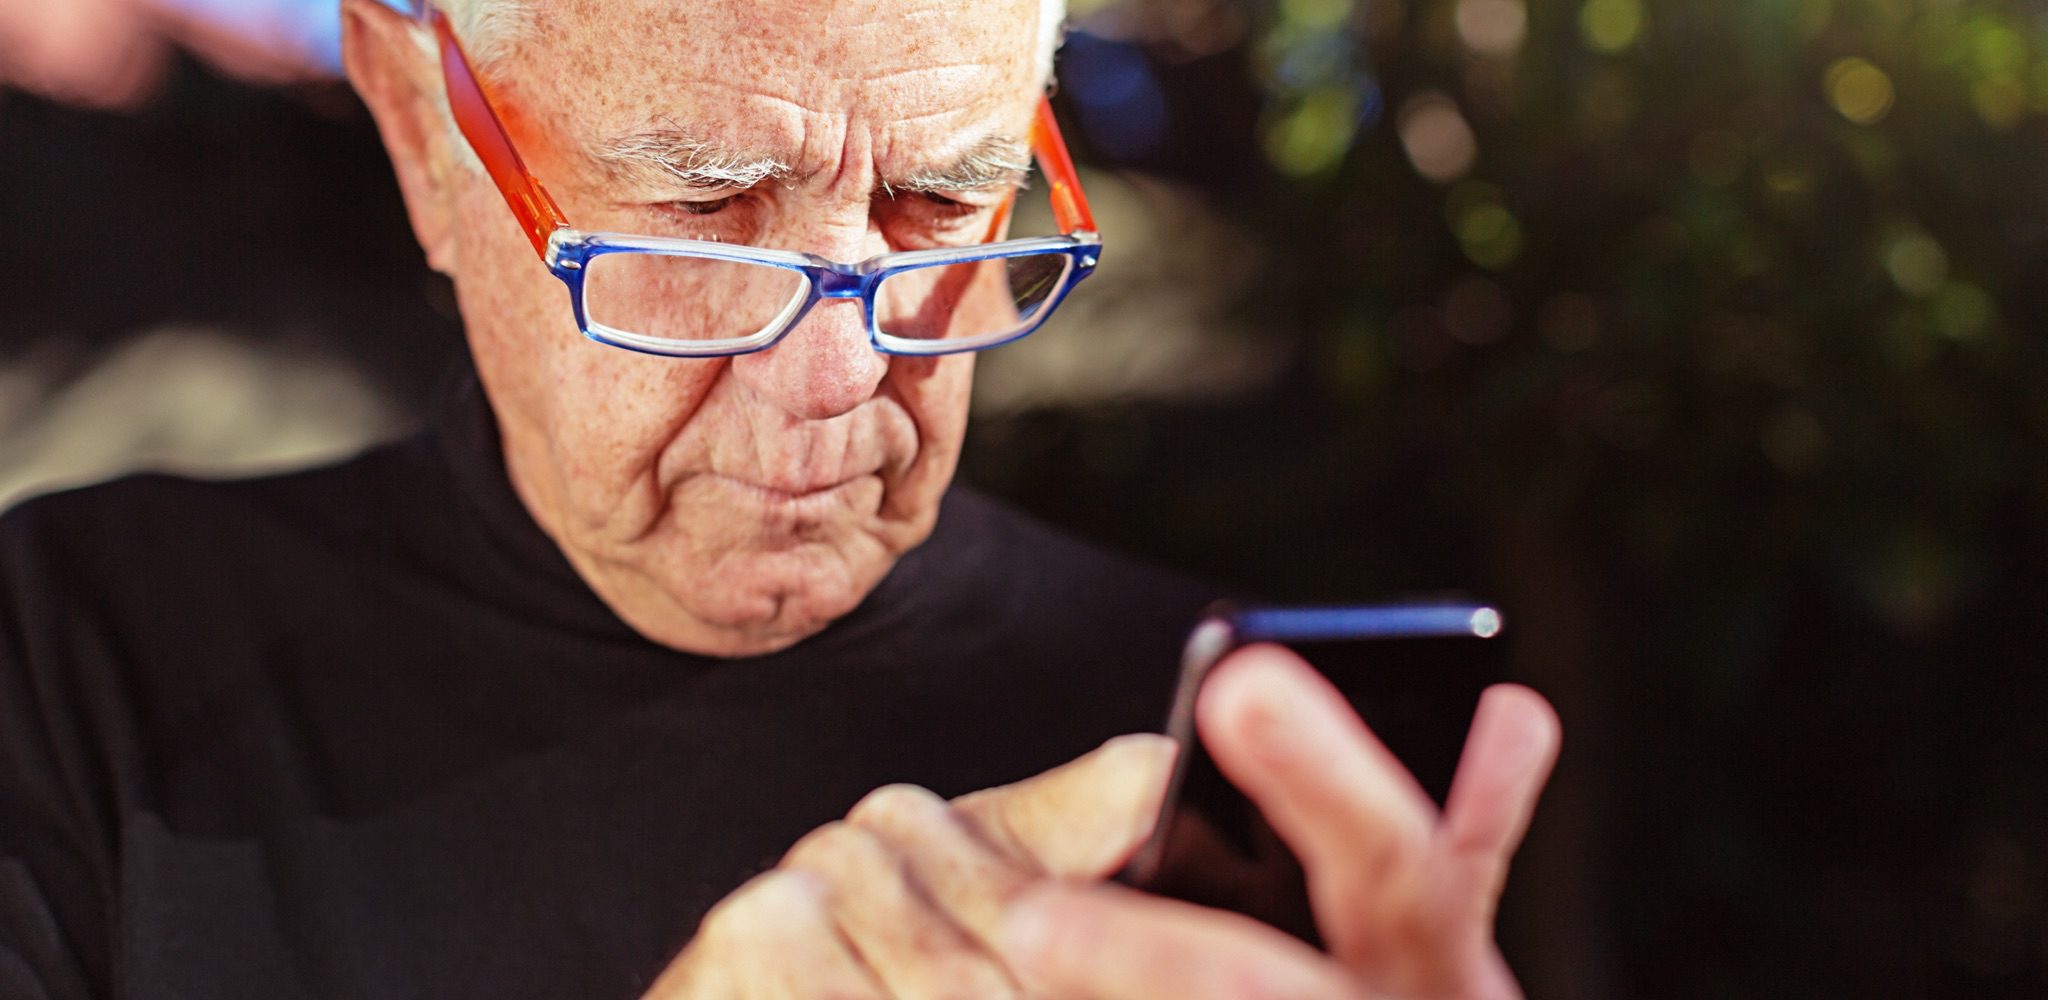 Senior man squinting over rim of glasses at phone.